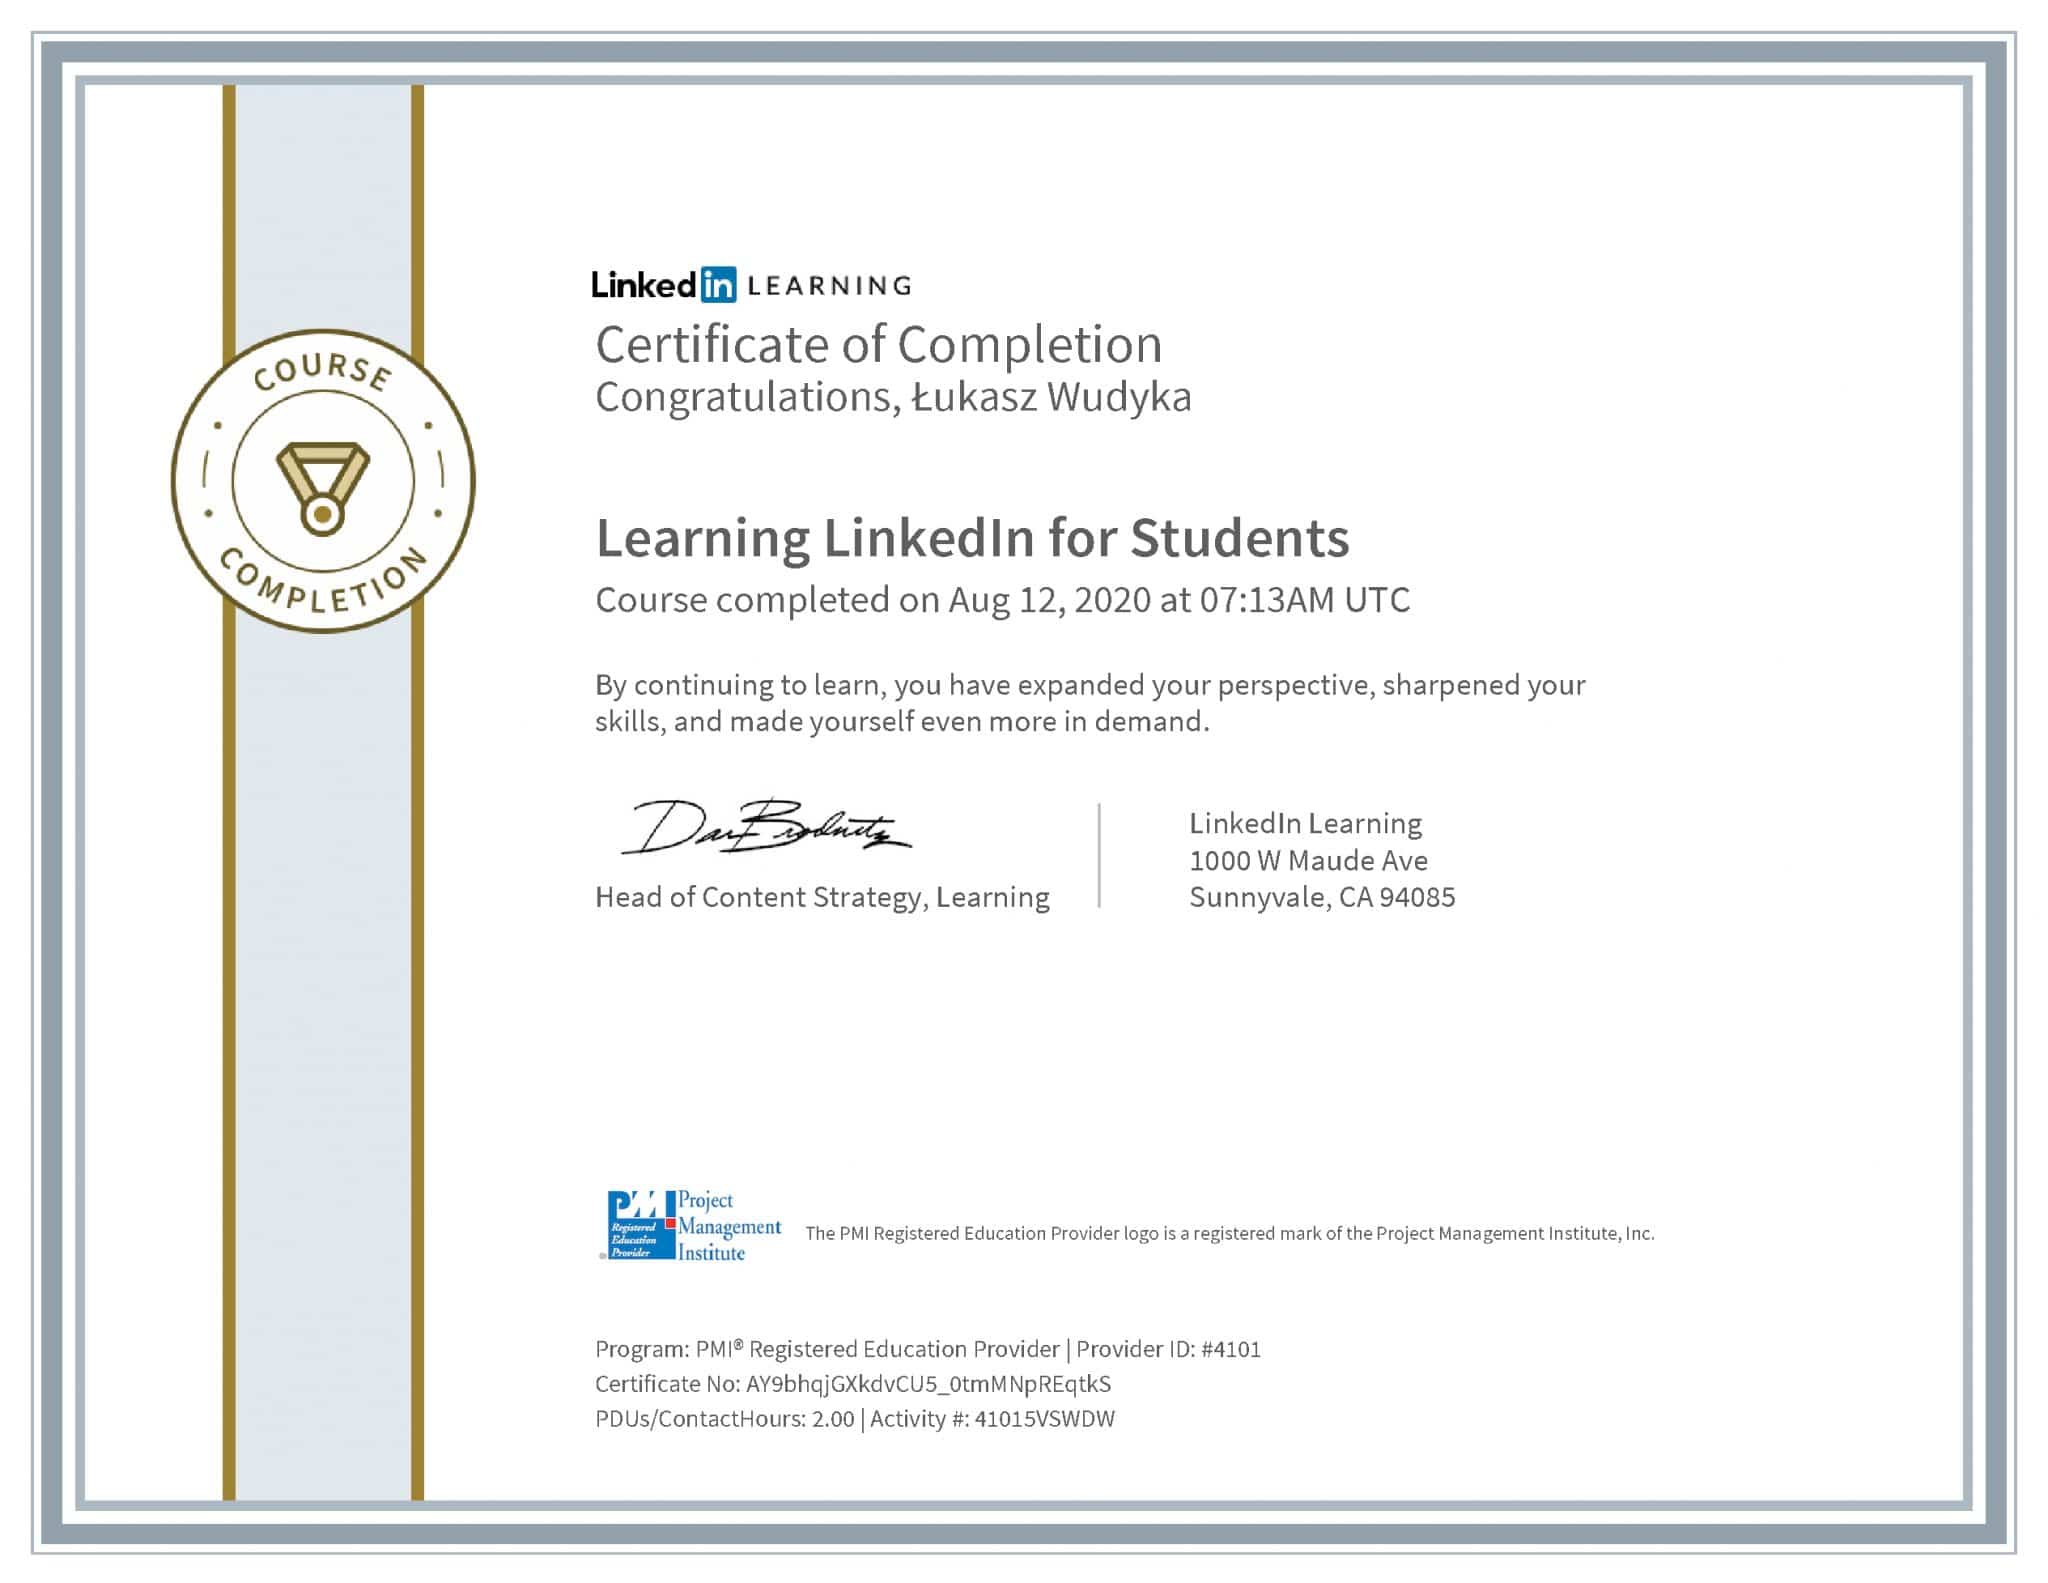 Łukasz Wudyka certyfikat LinkedIn Learning LinkedIn for Students PMI